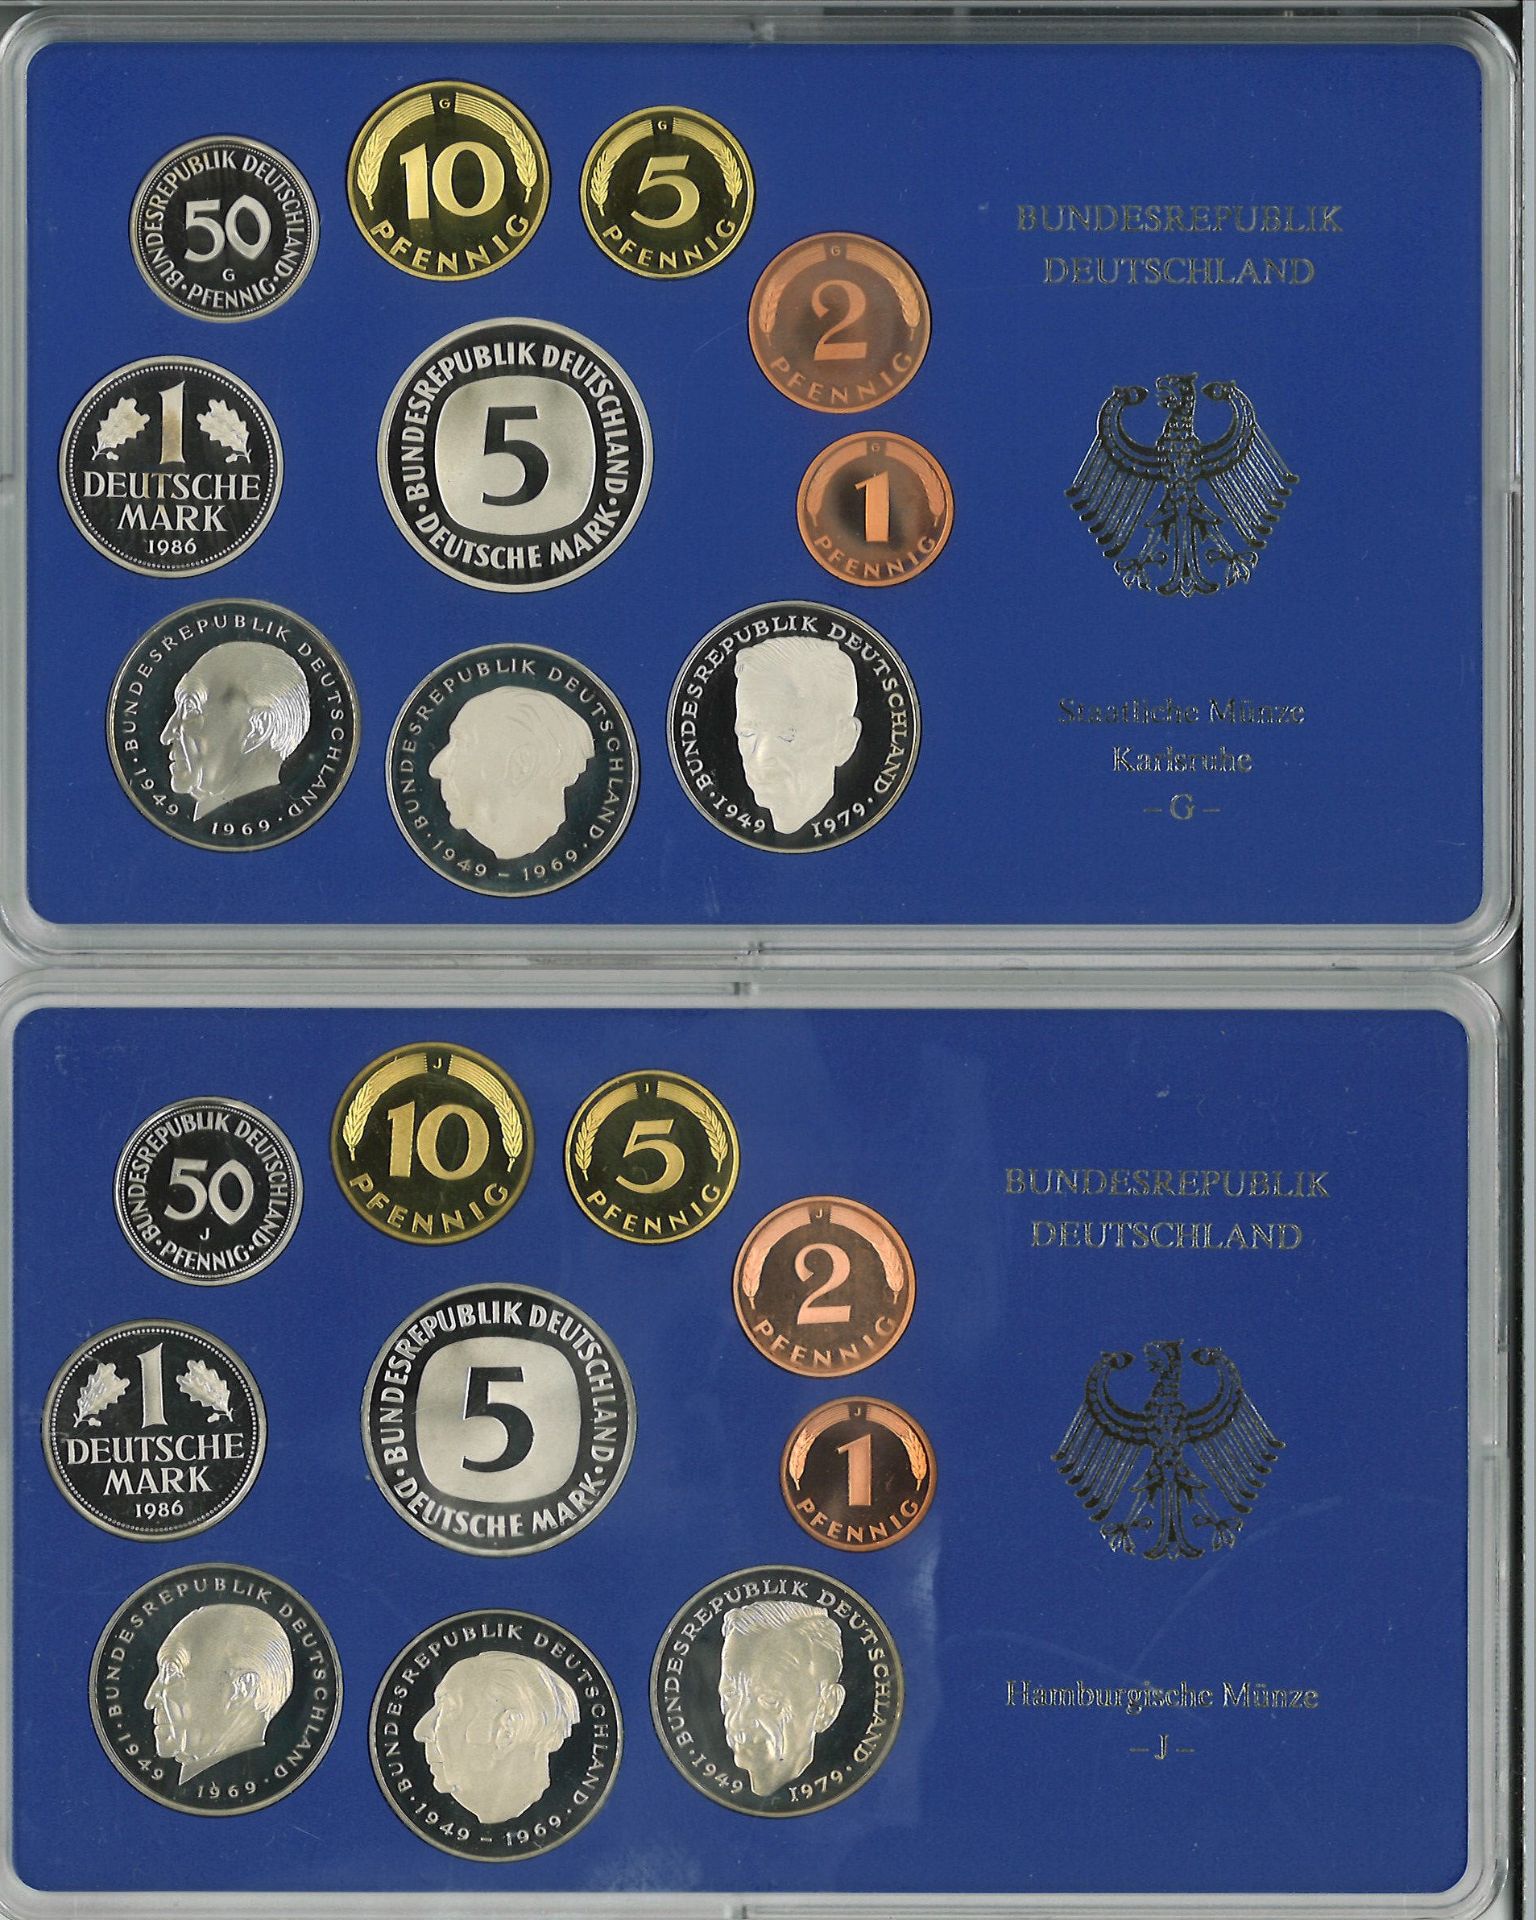 BRD Münzsets Jahrgang 1986, D, F, G und J. Im Original Blister. - Bild 4 aus 4